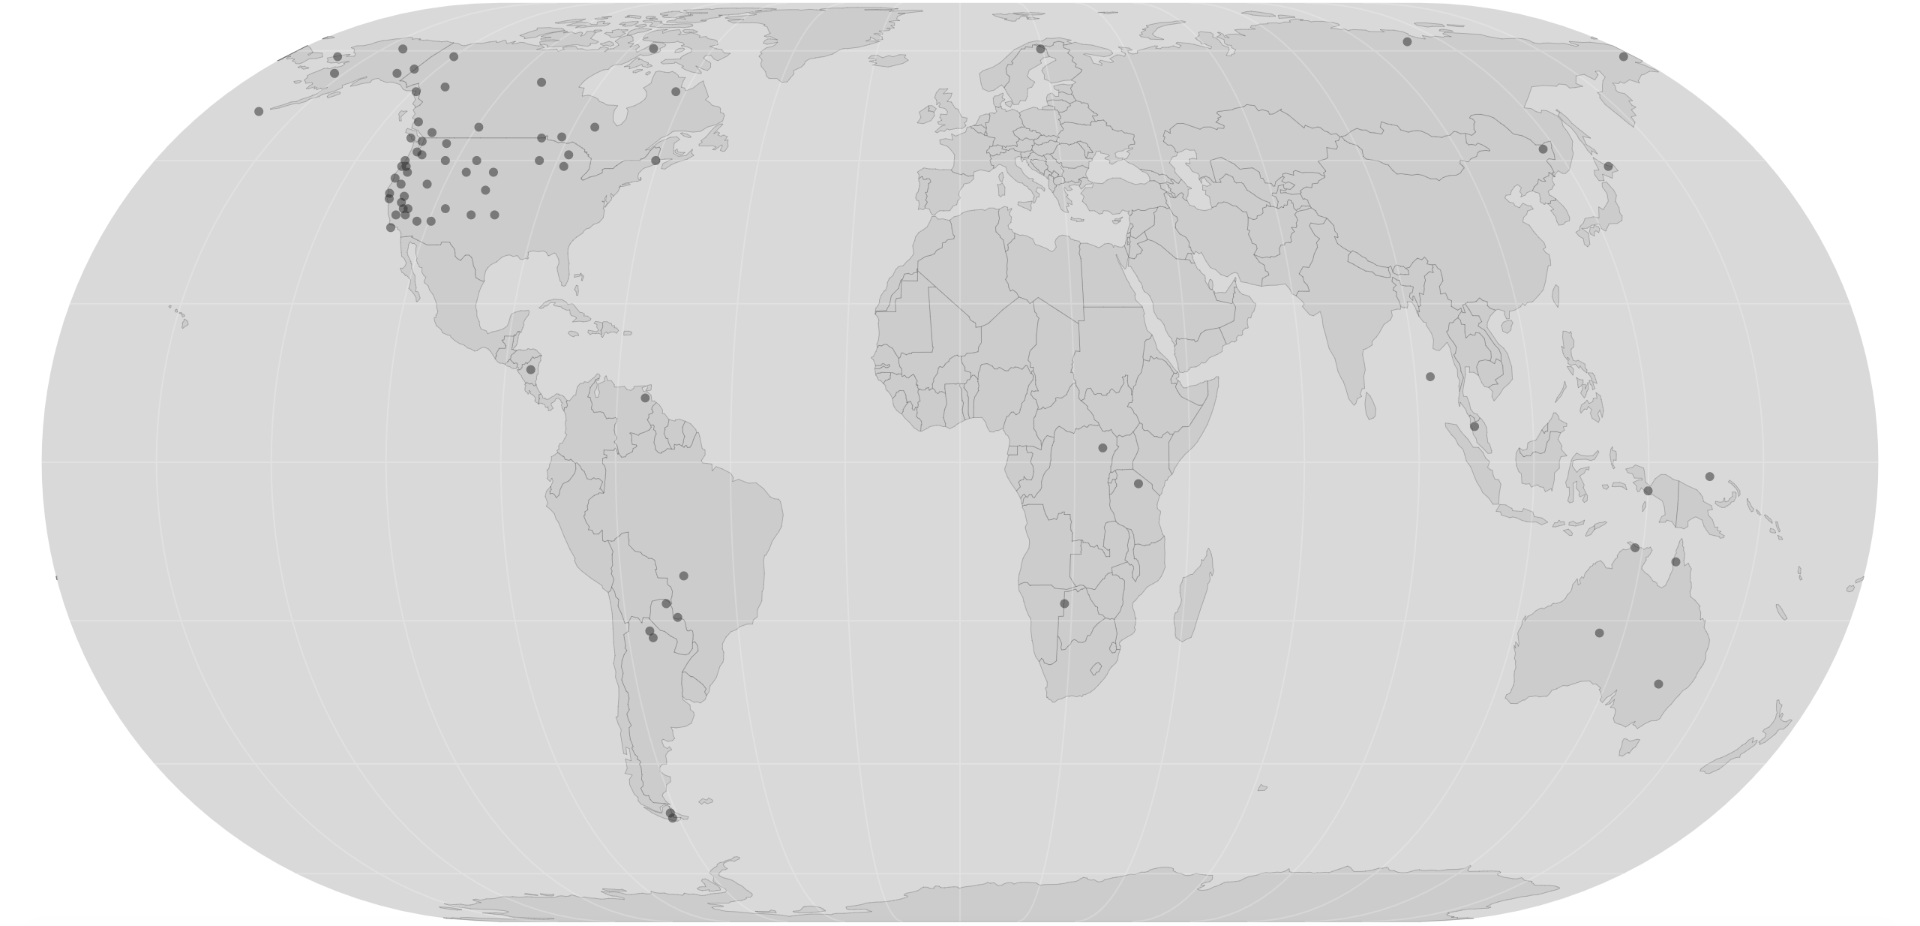 world map showing myth-telling rules study sample